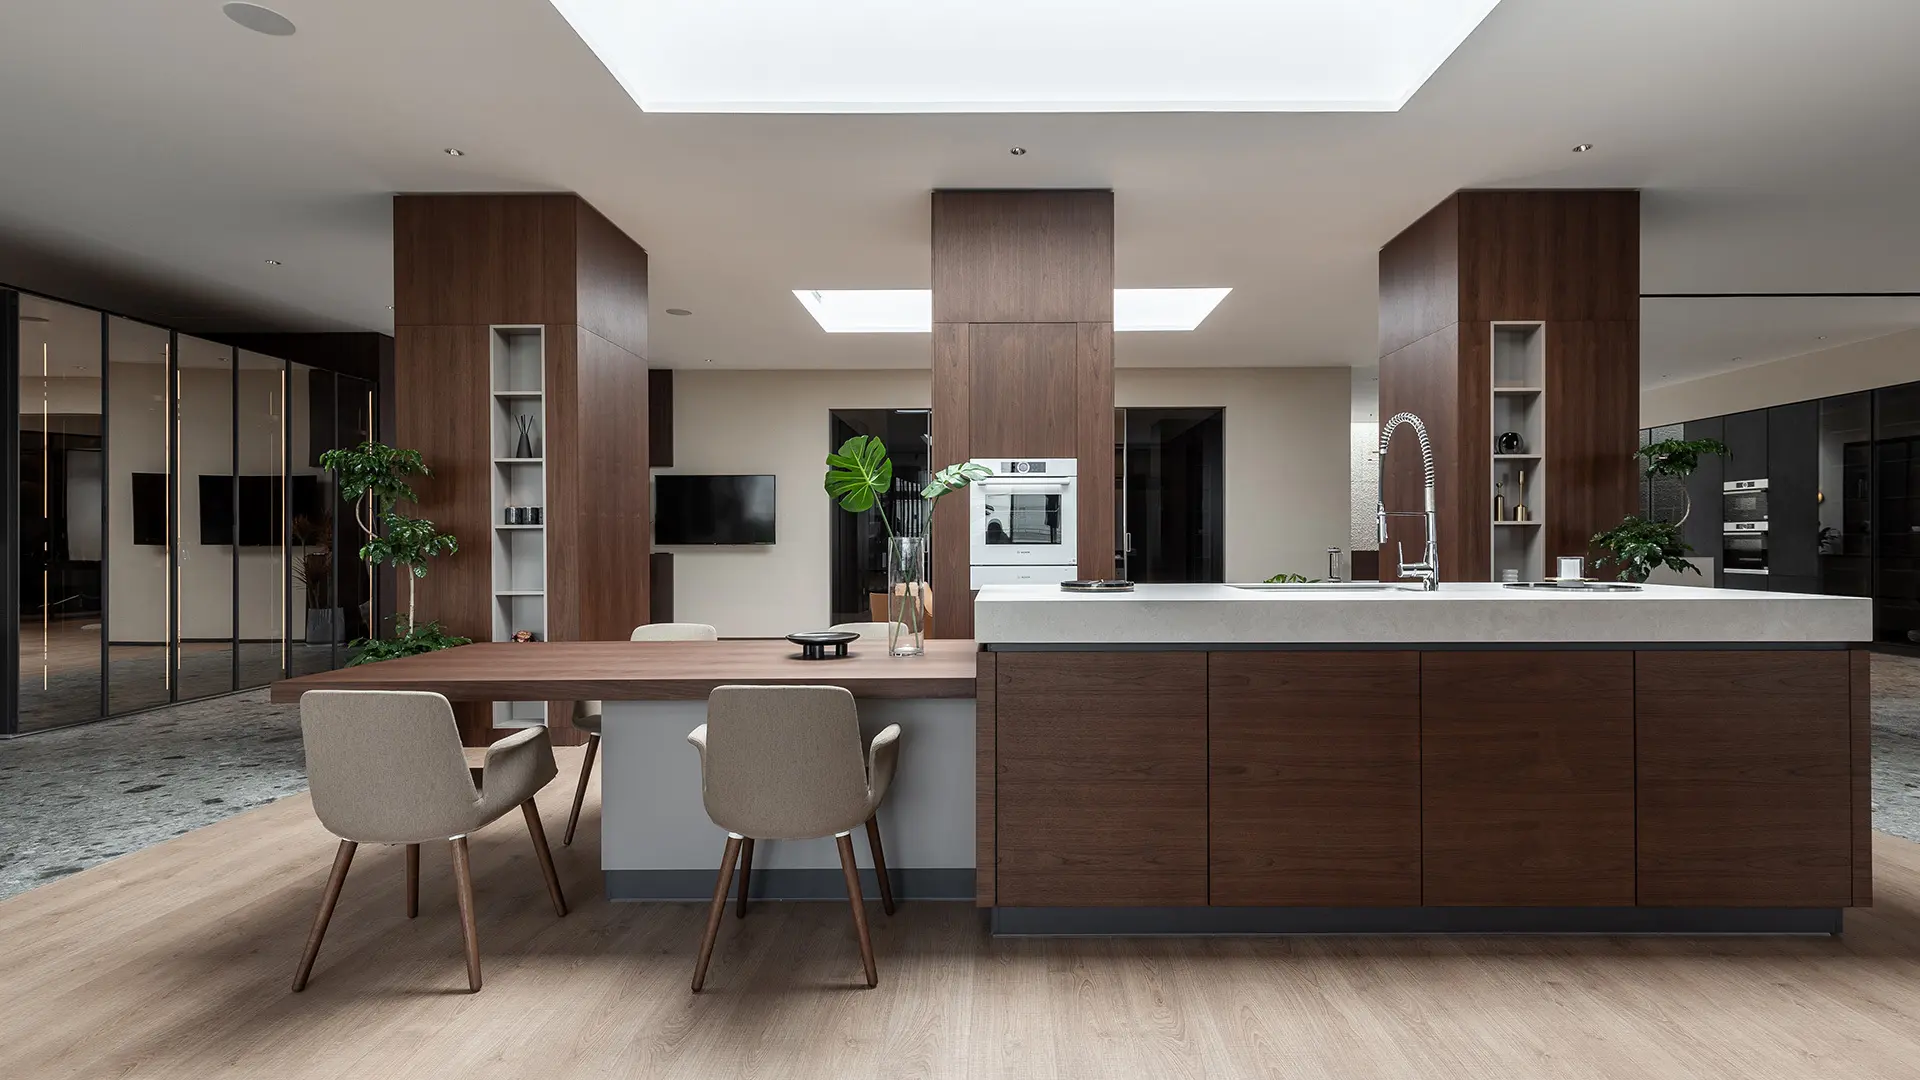 Solitude modern wooden ceramic kitchen cabinet for home bk ciandre 1